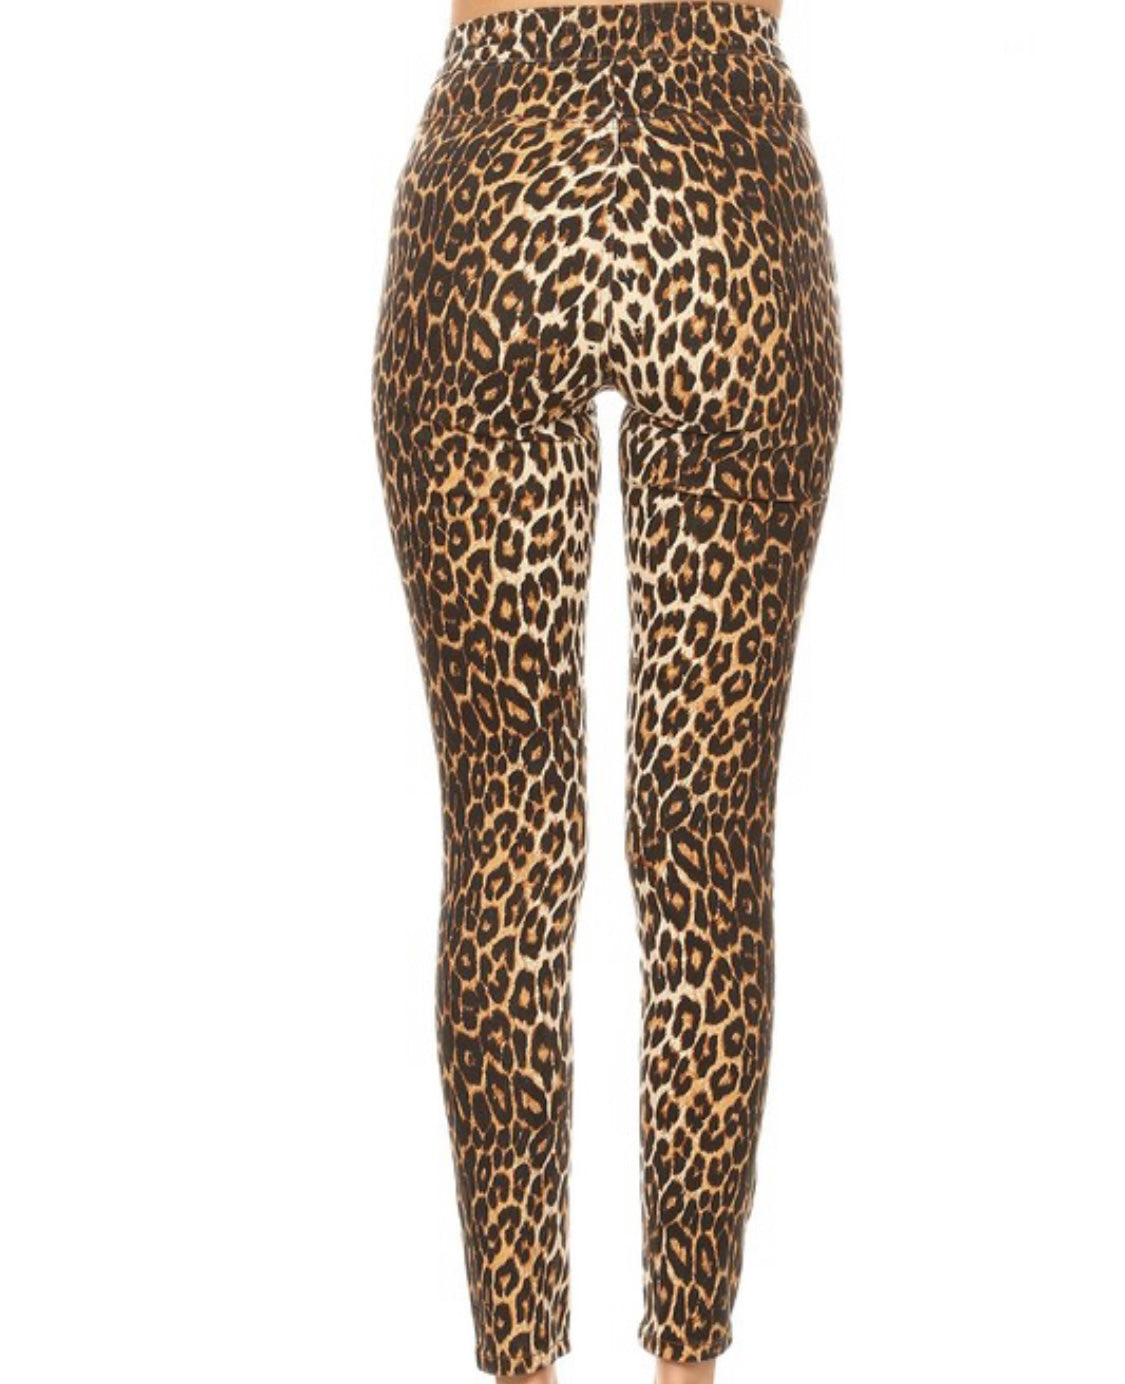 GOLDxTEAL leopard skinny jeans. High waist leopard print stretch jeans.